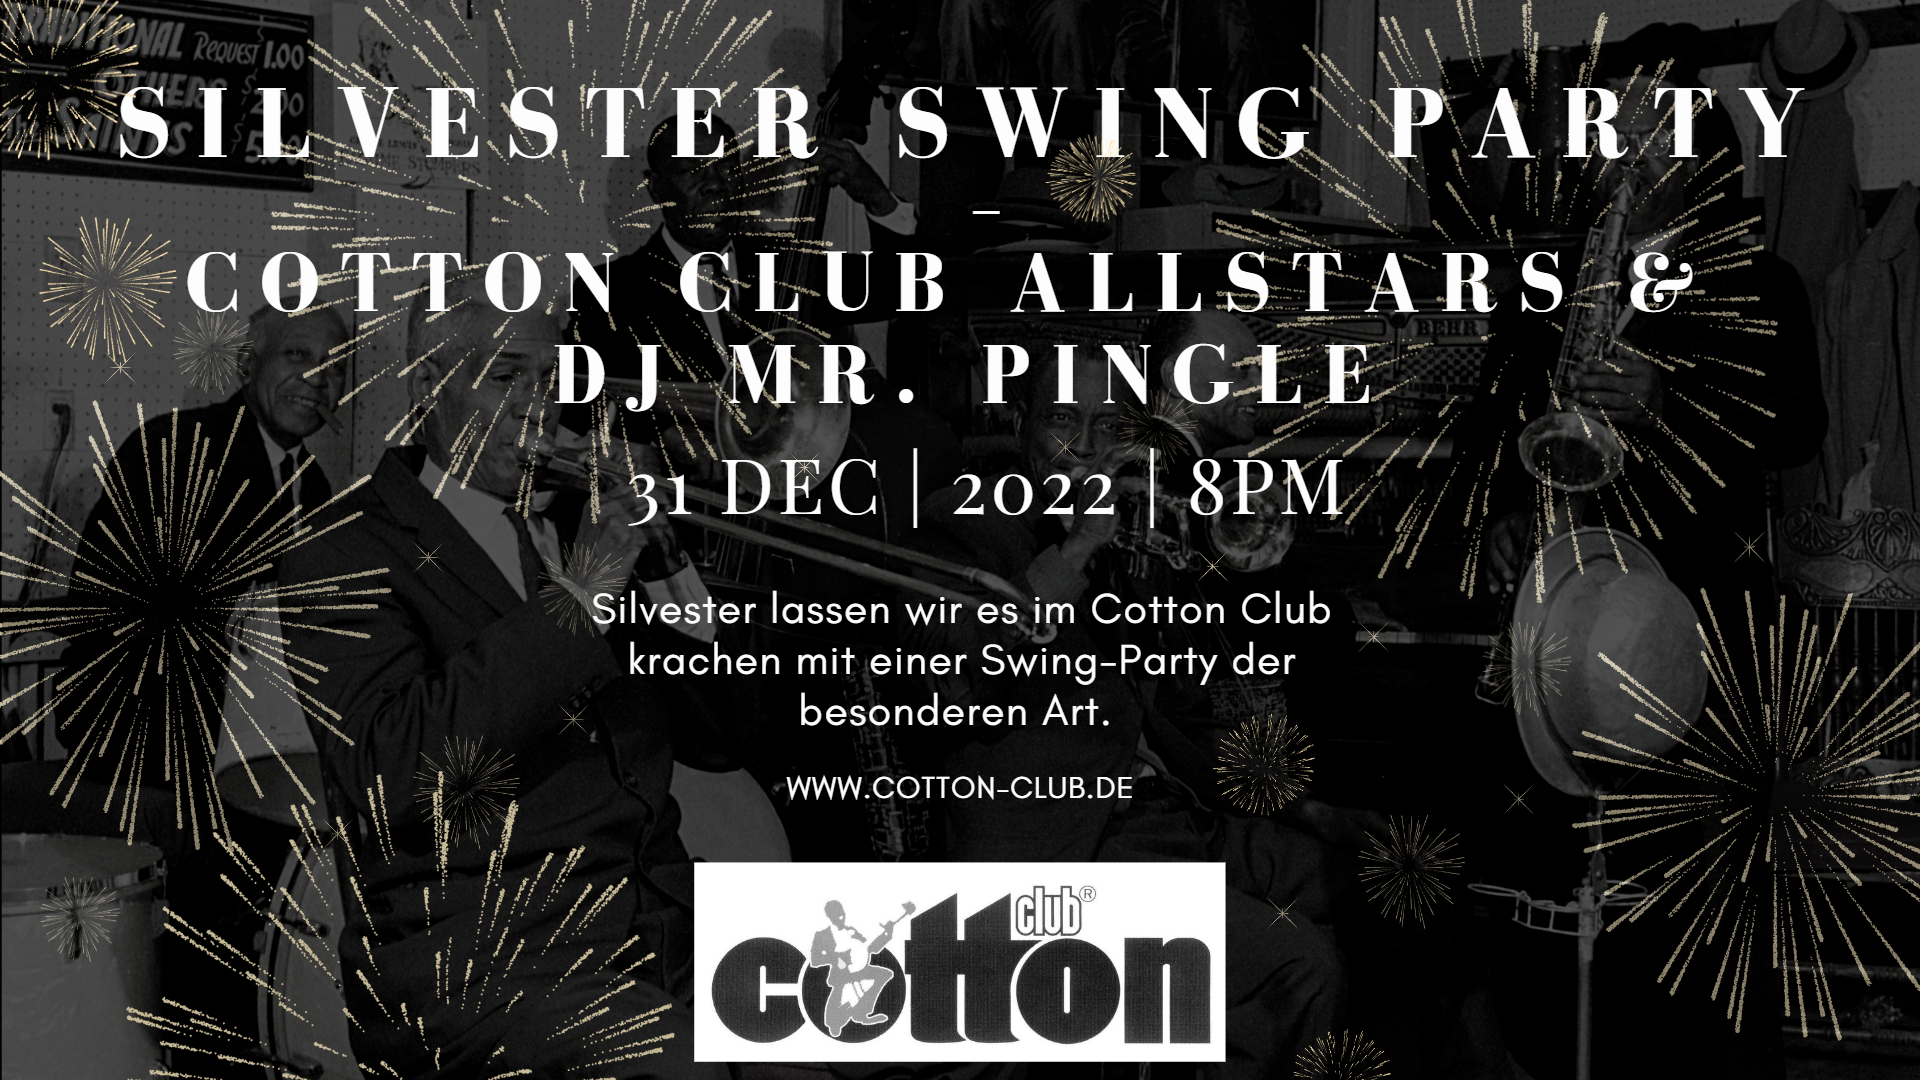 SILVESTER SWING PARTY - COTTON CLUB ALLSTARS & DJ MR PINGLE